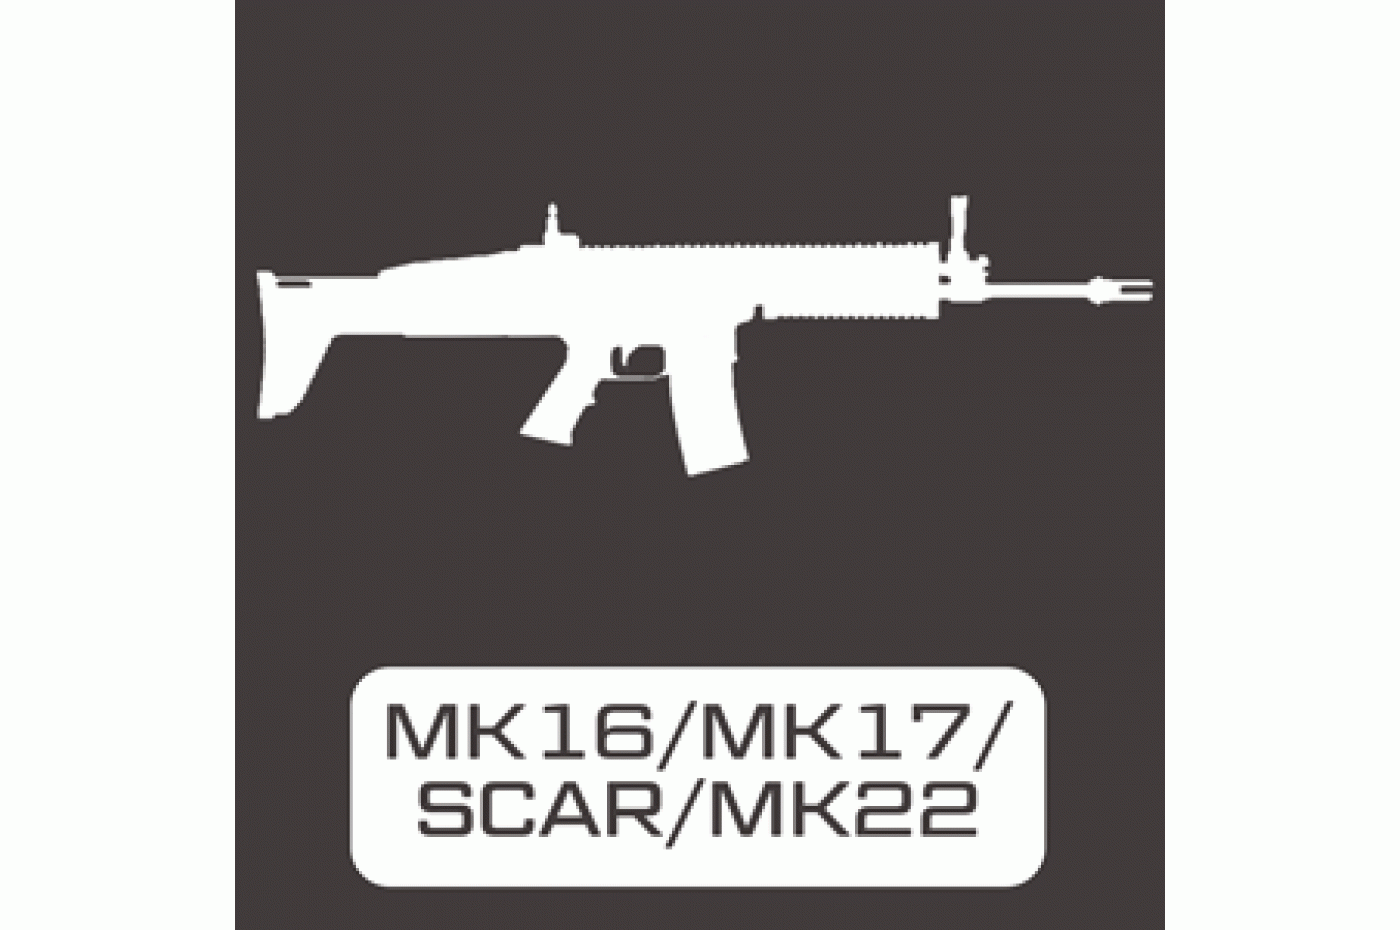 MK16 / MK17 / SCAR / MK22